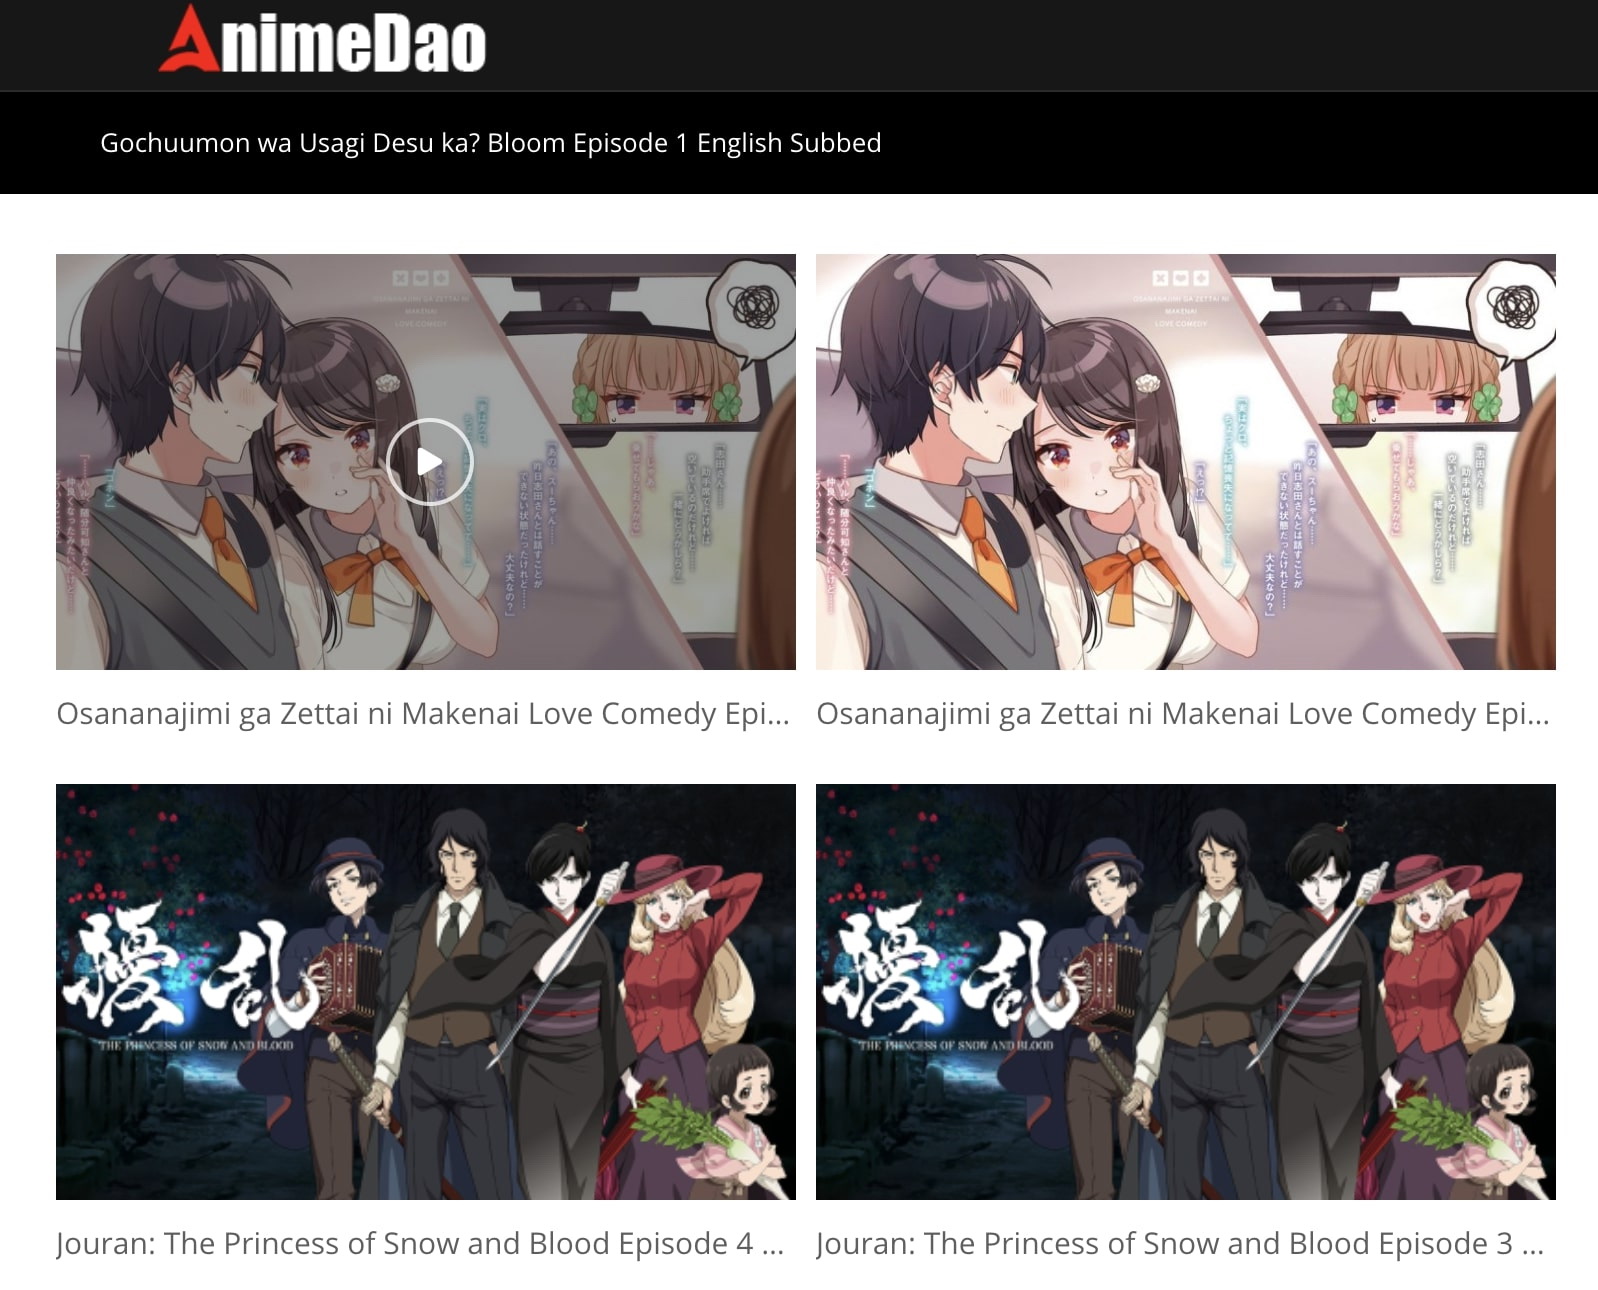 Top 20 High School Romance Anime | Articles on WatchMojo.com